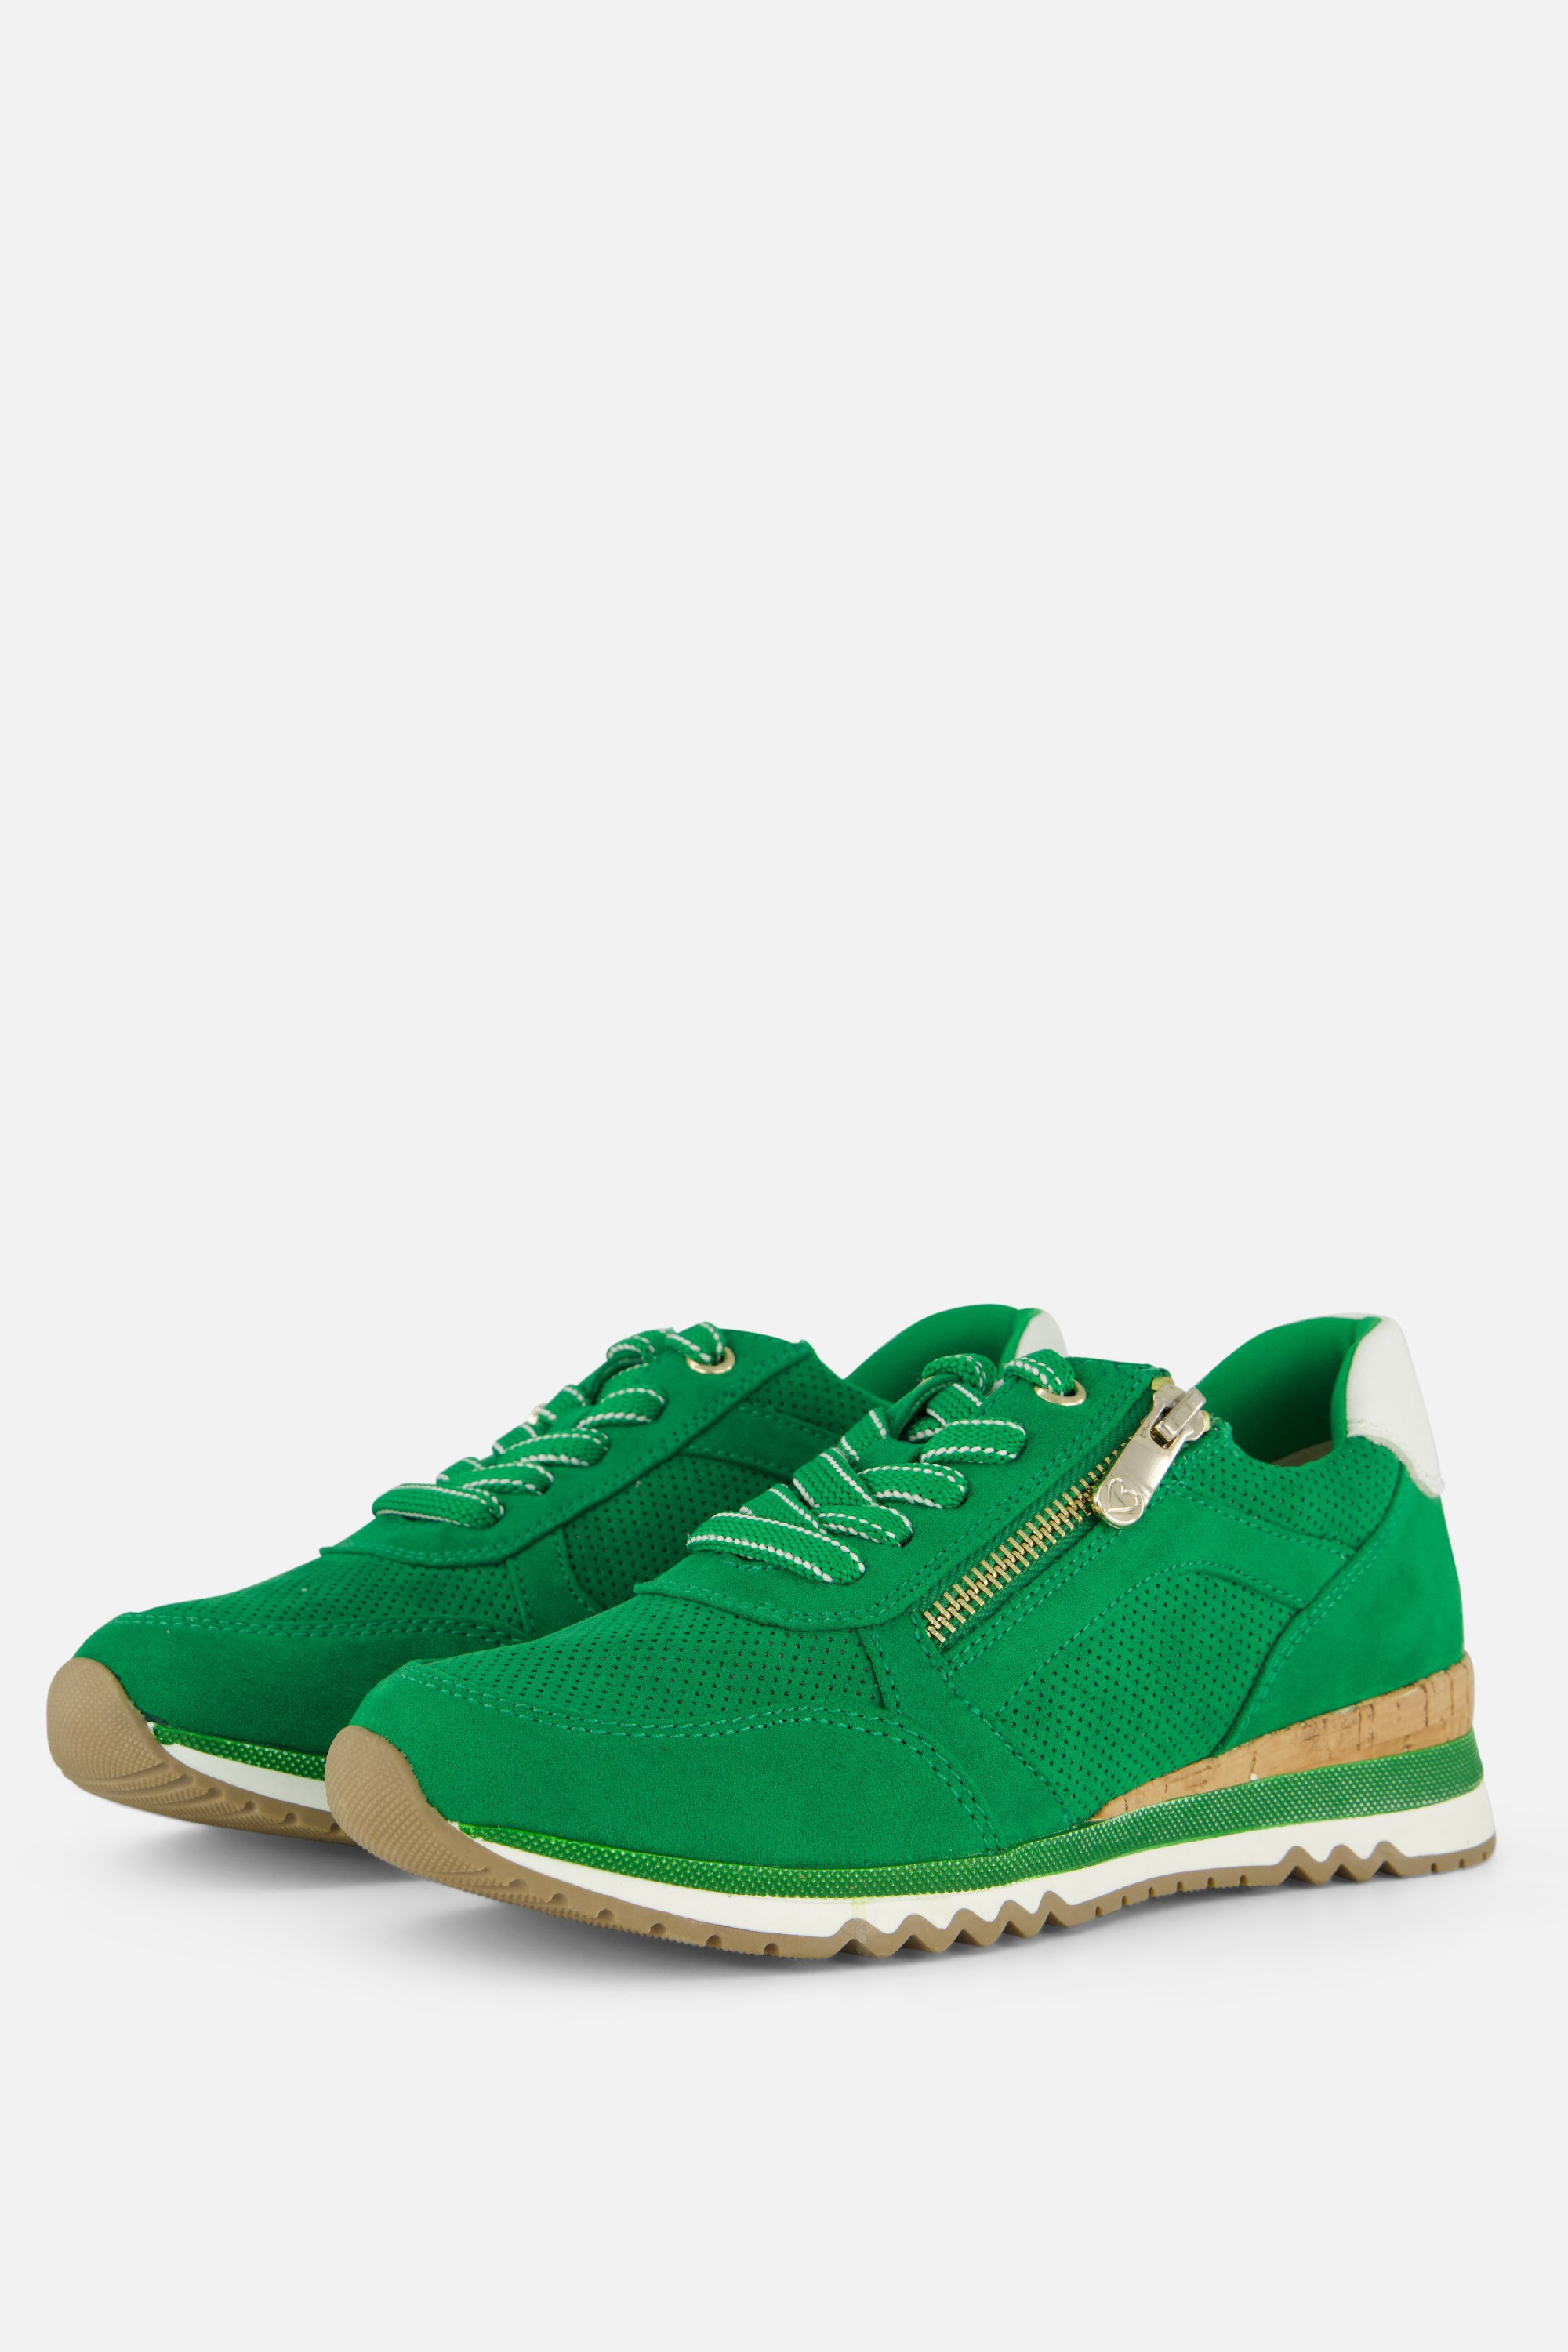 Marco Tozzi Marco Tozzi Perfo Sneakers groen Textiel